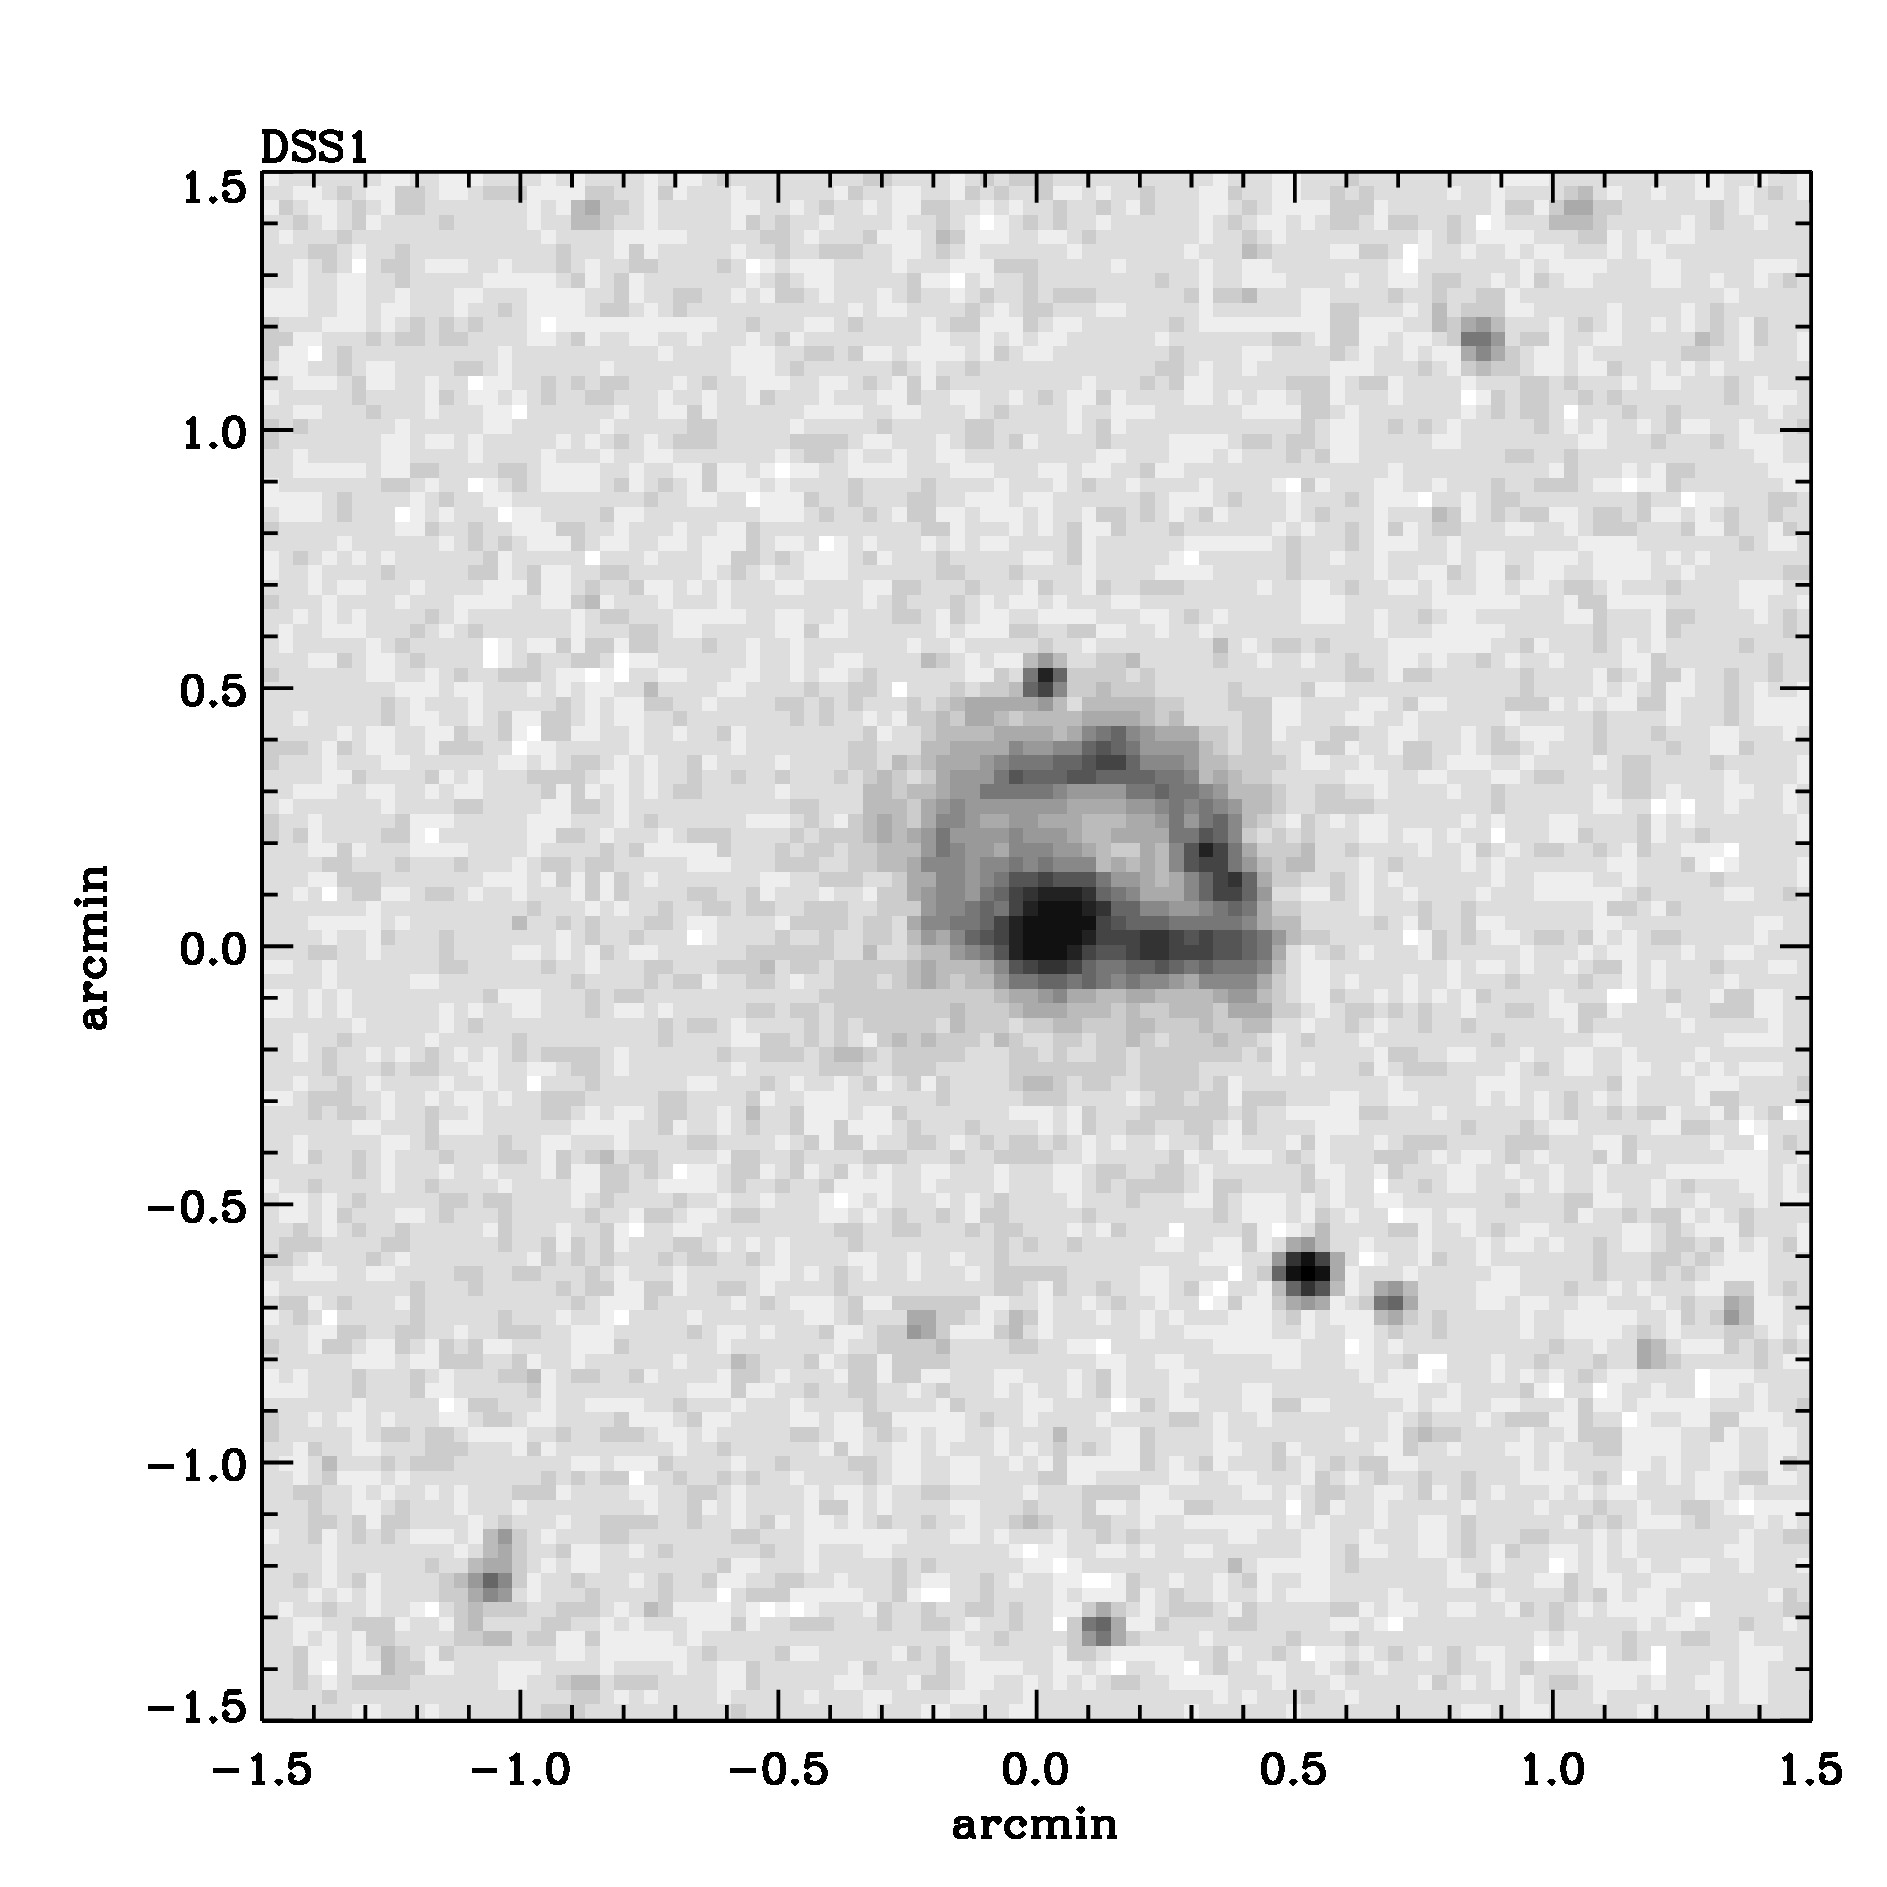 Optical image for SWIFT J0234.6-0848